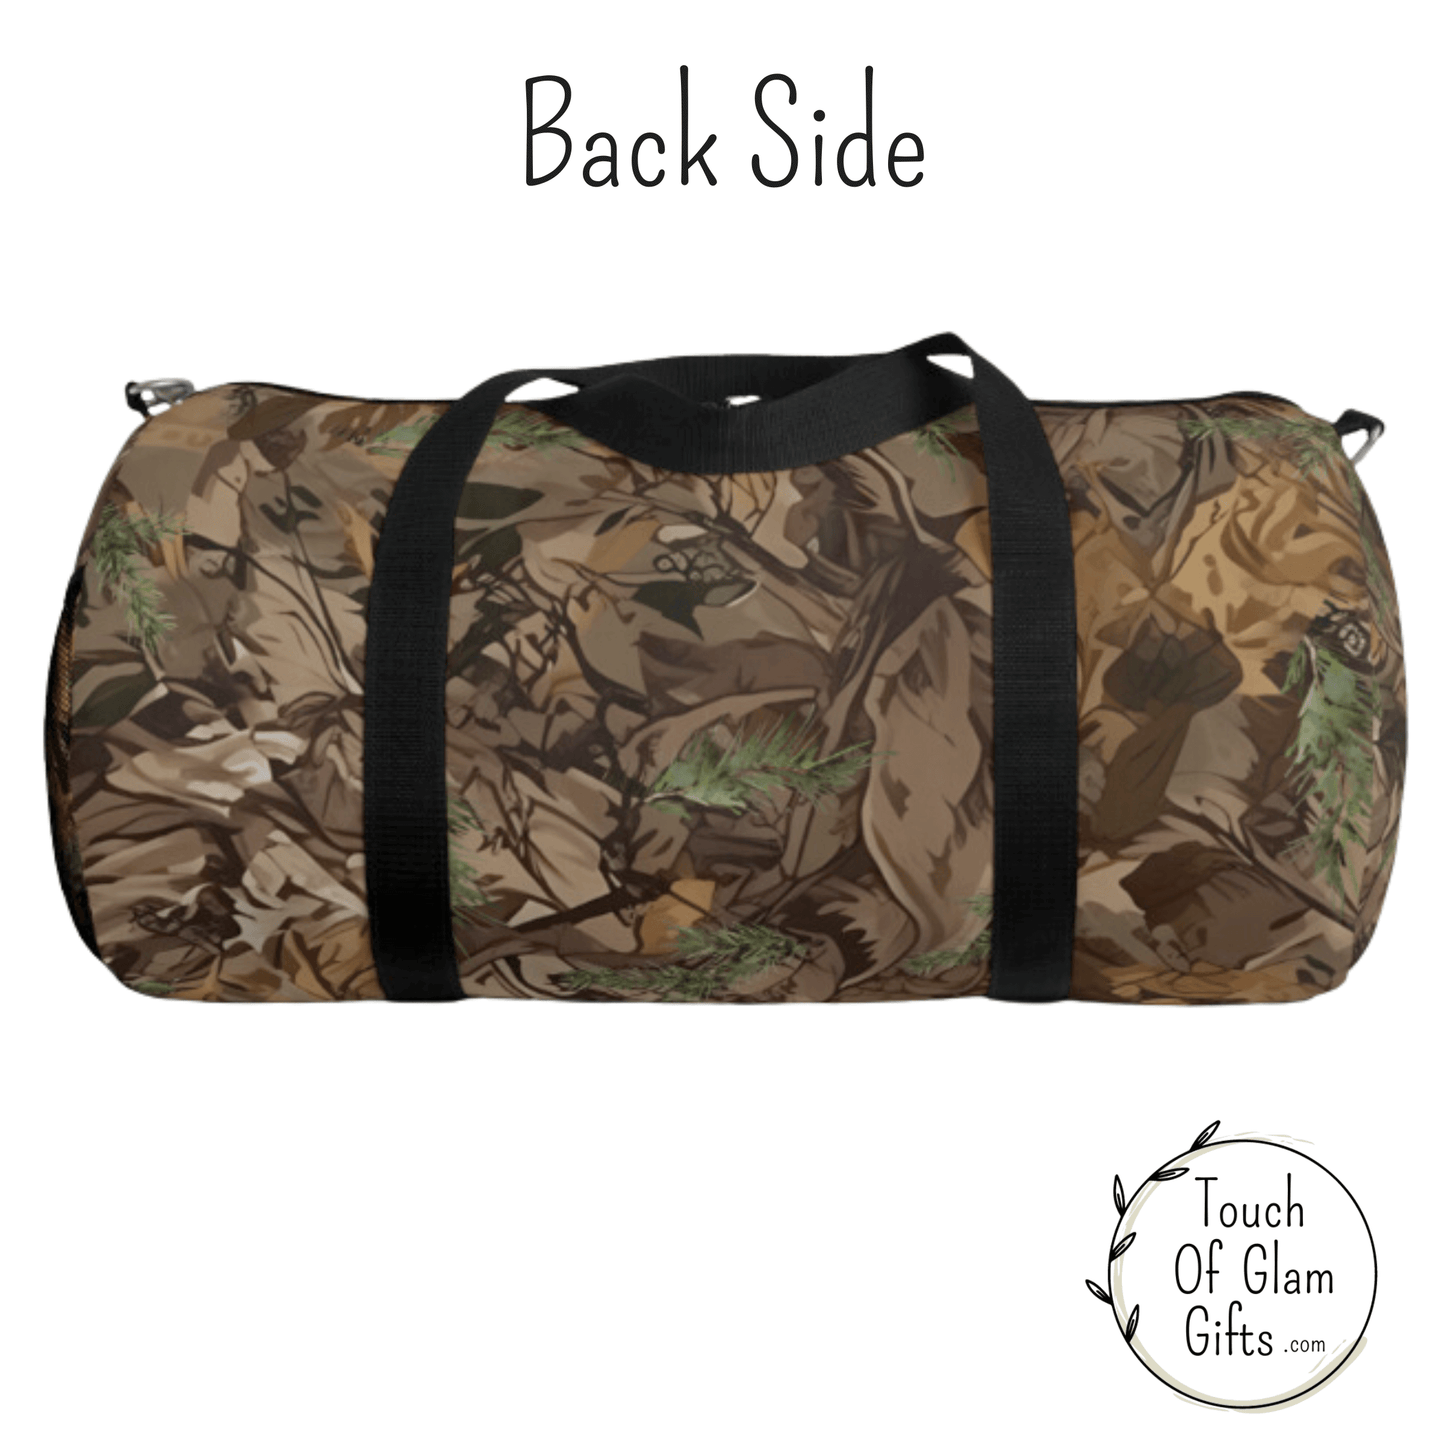 The back side of the camo duffel bag is plain camo fabric.